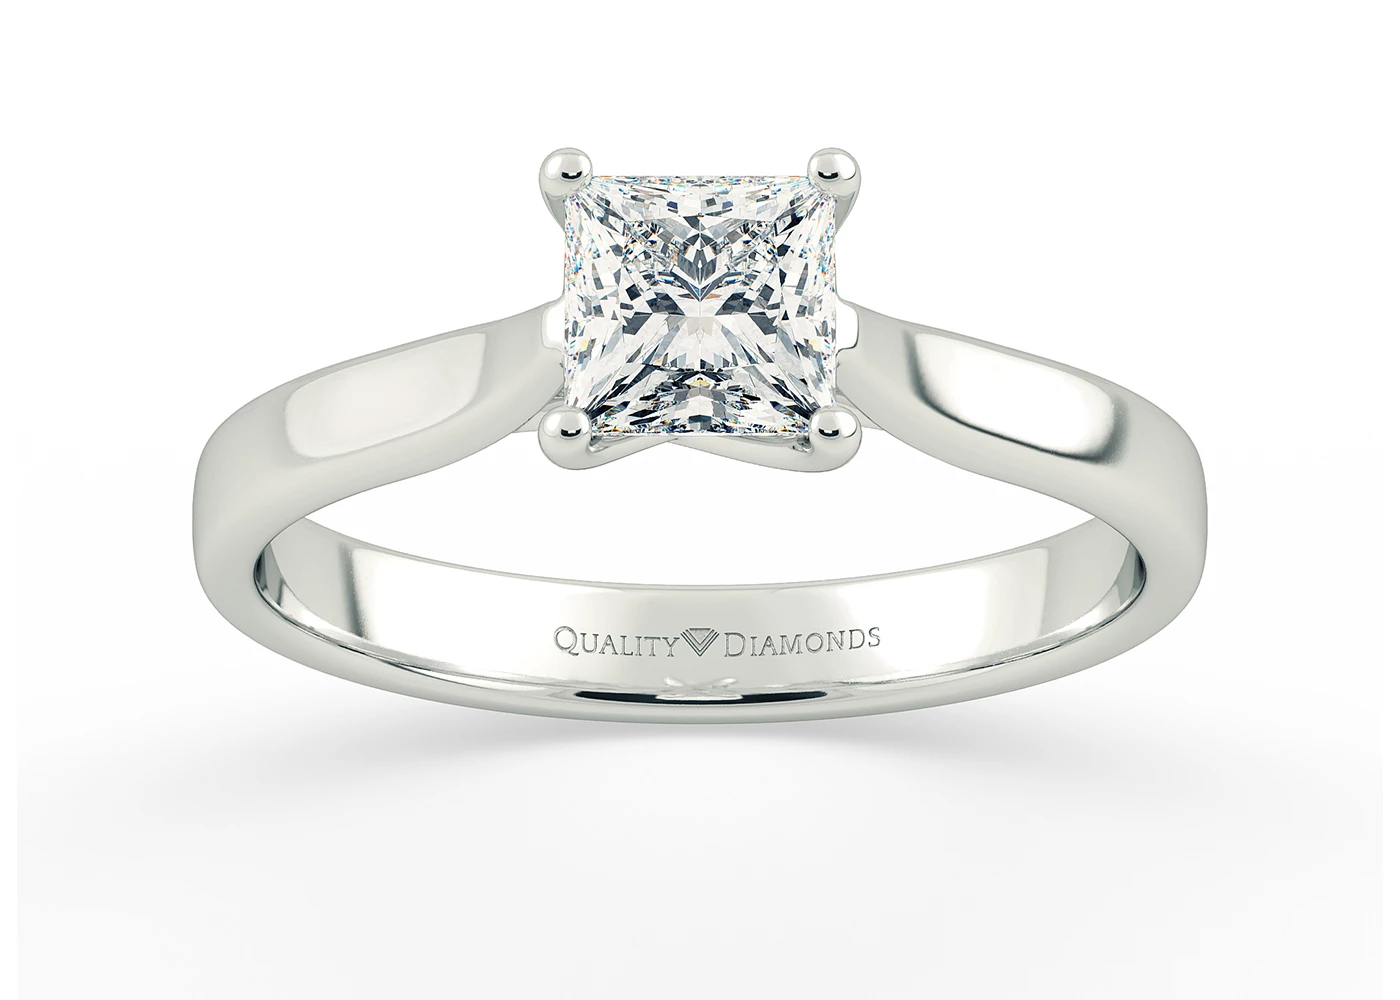 Princess Mirabelle Diamond Ring in 9K White Gold